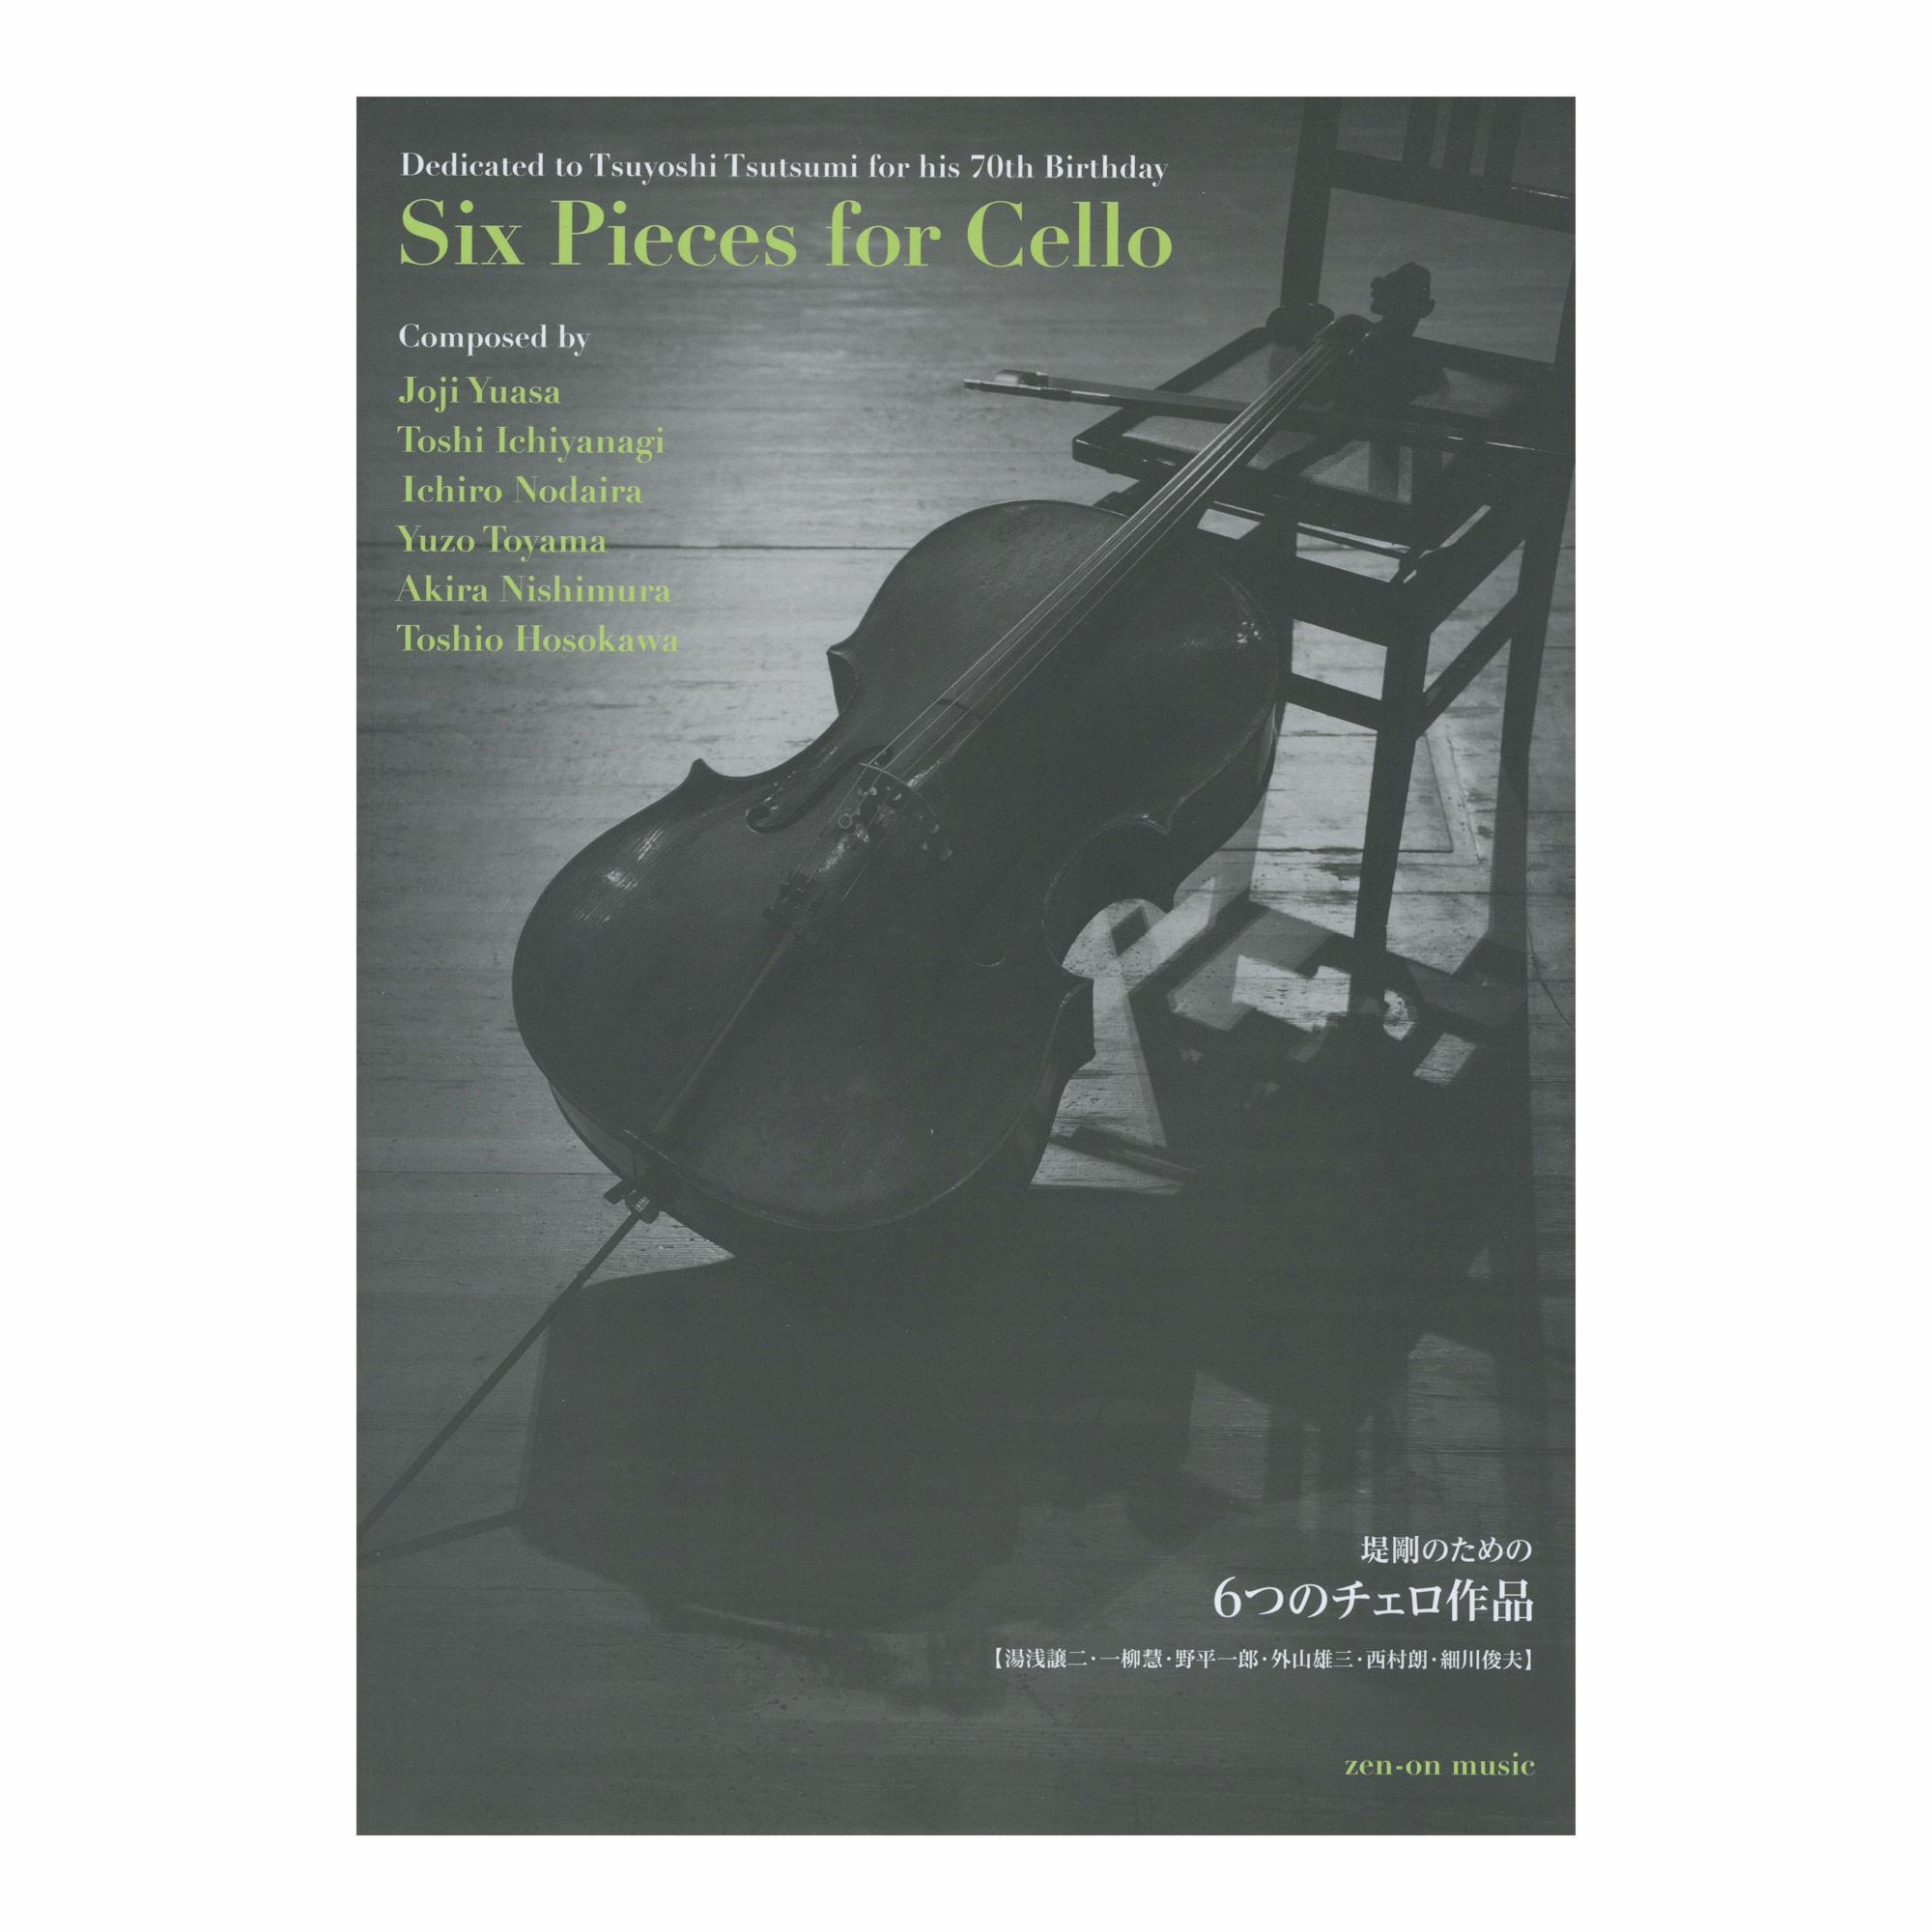 Six Pieces for Cello